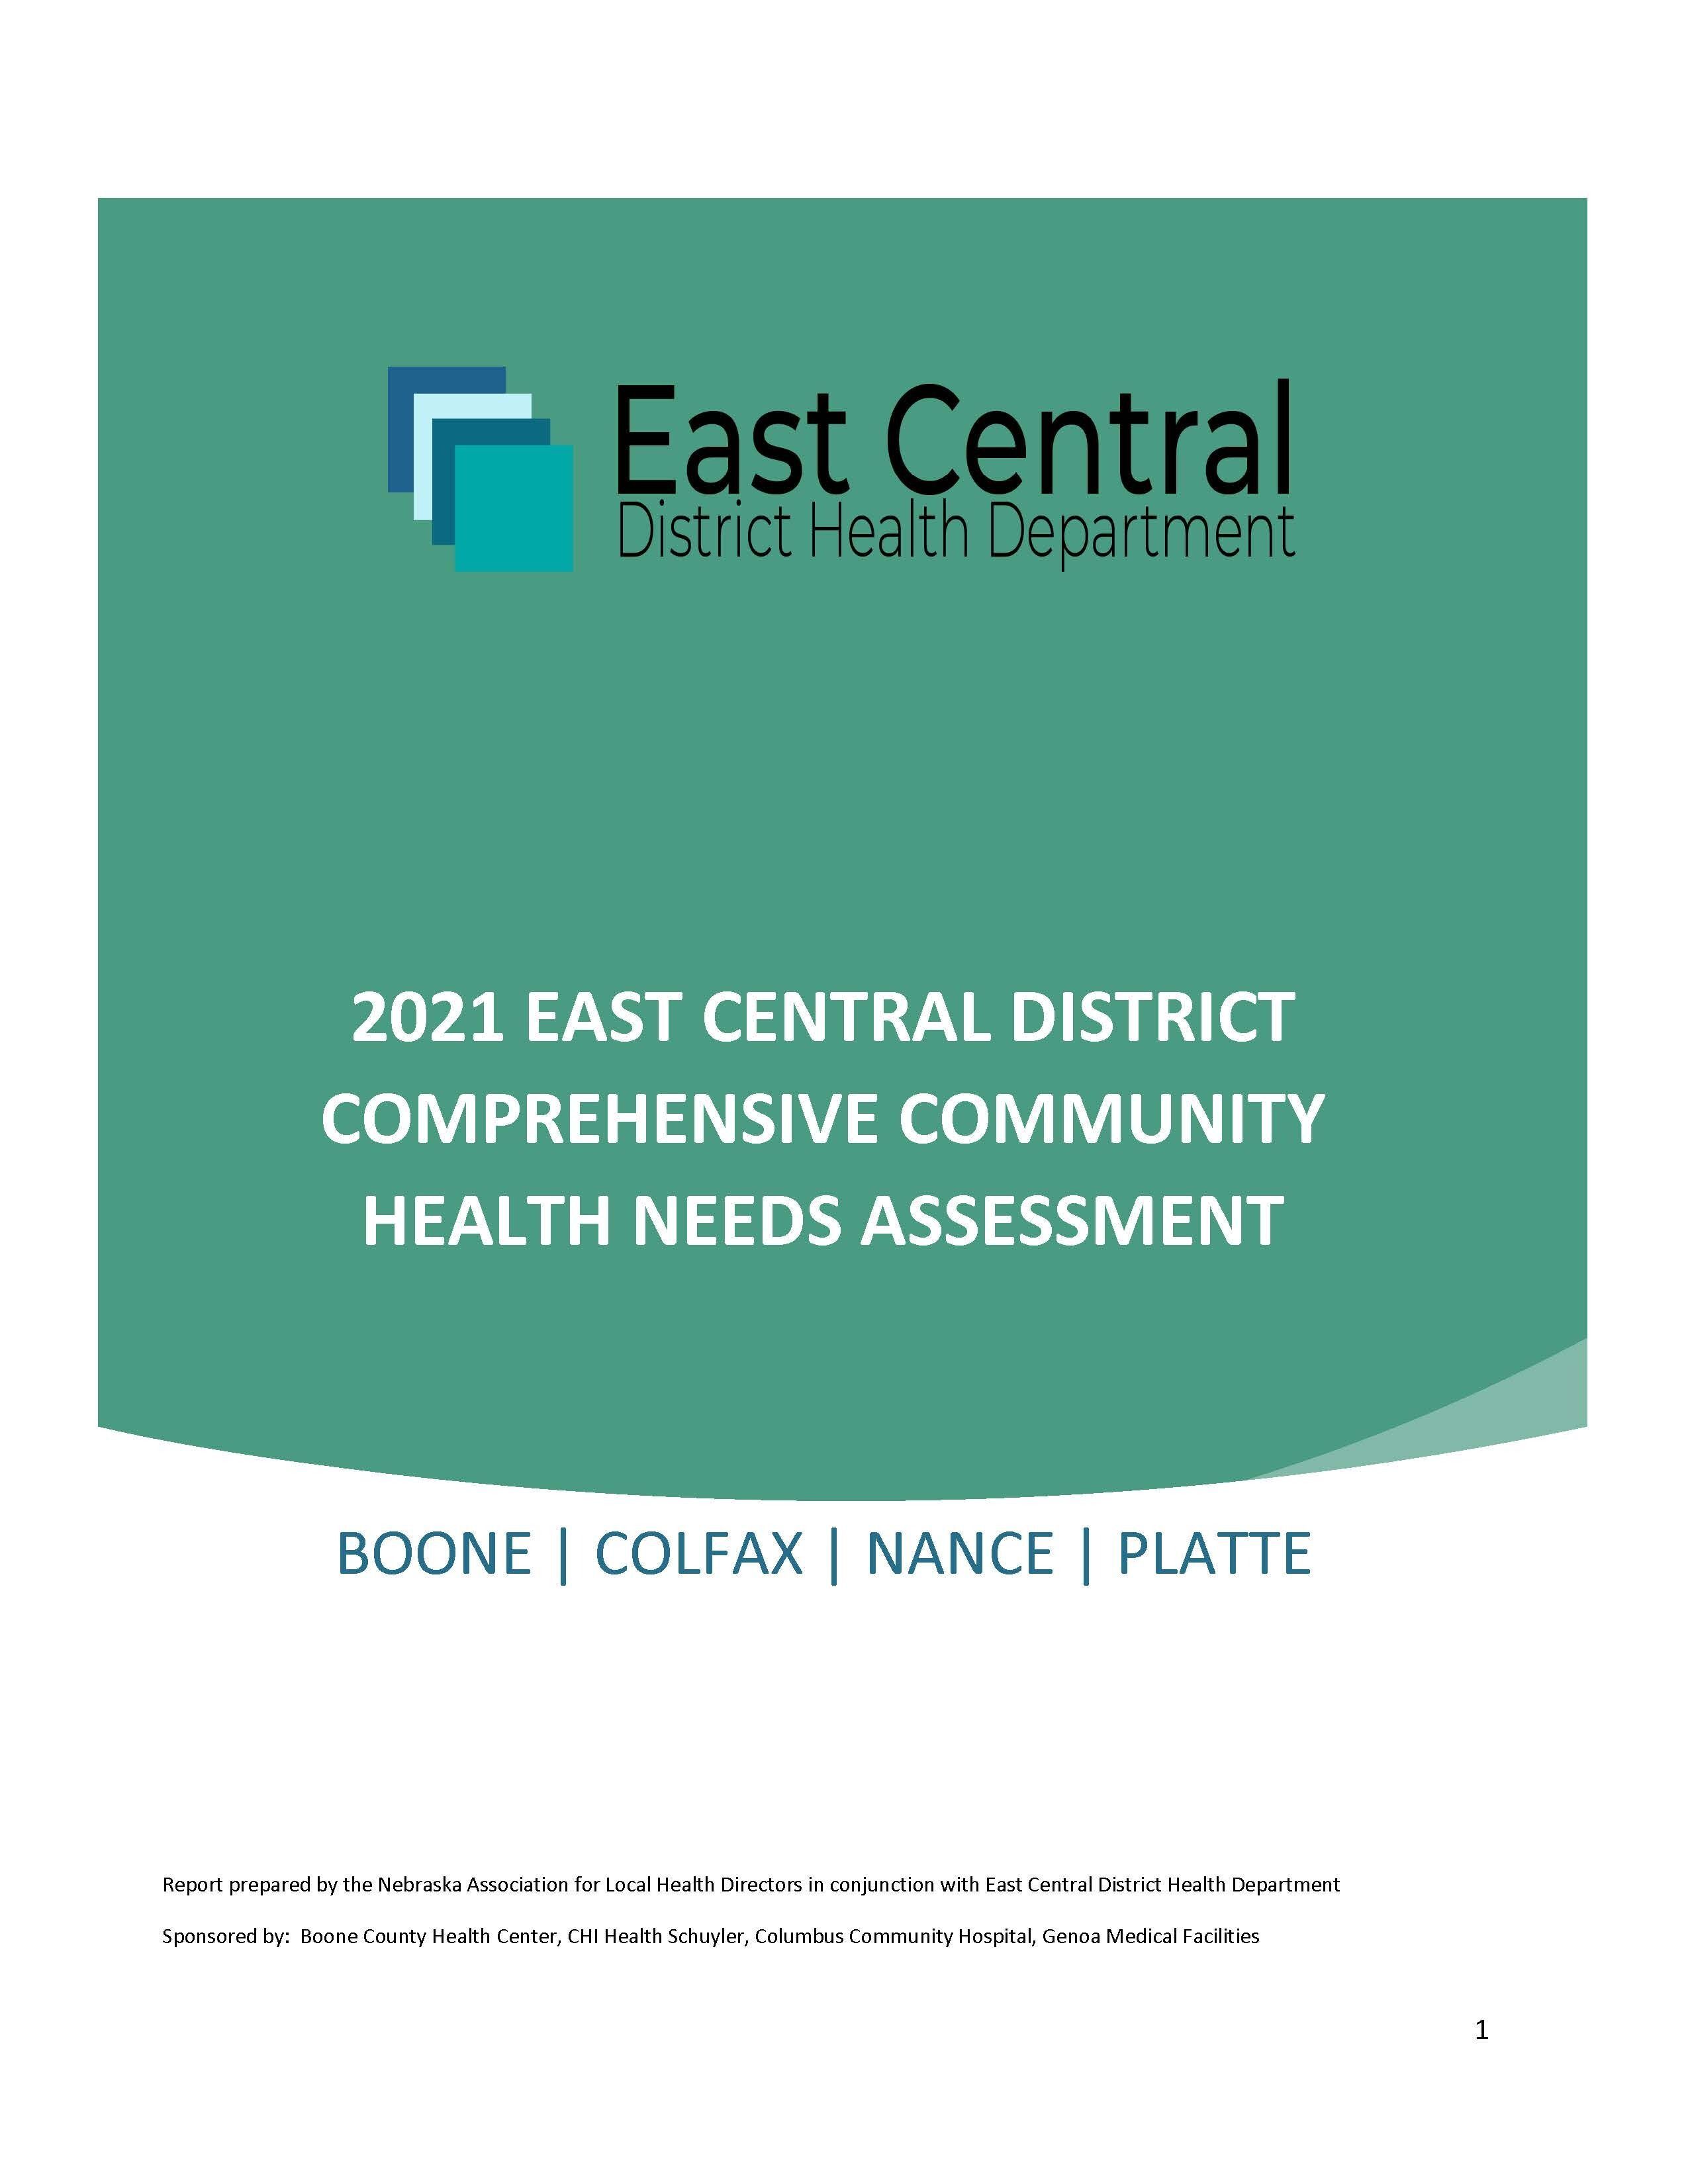 2021 Community Health Needs Assessment